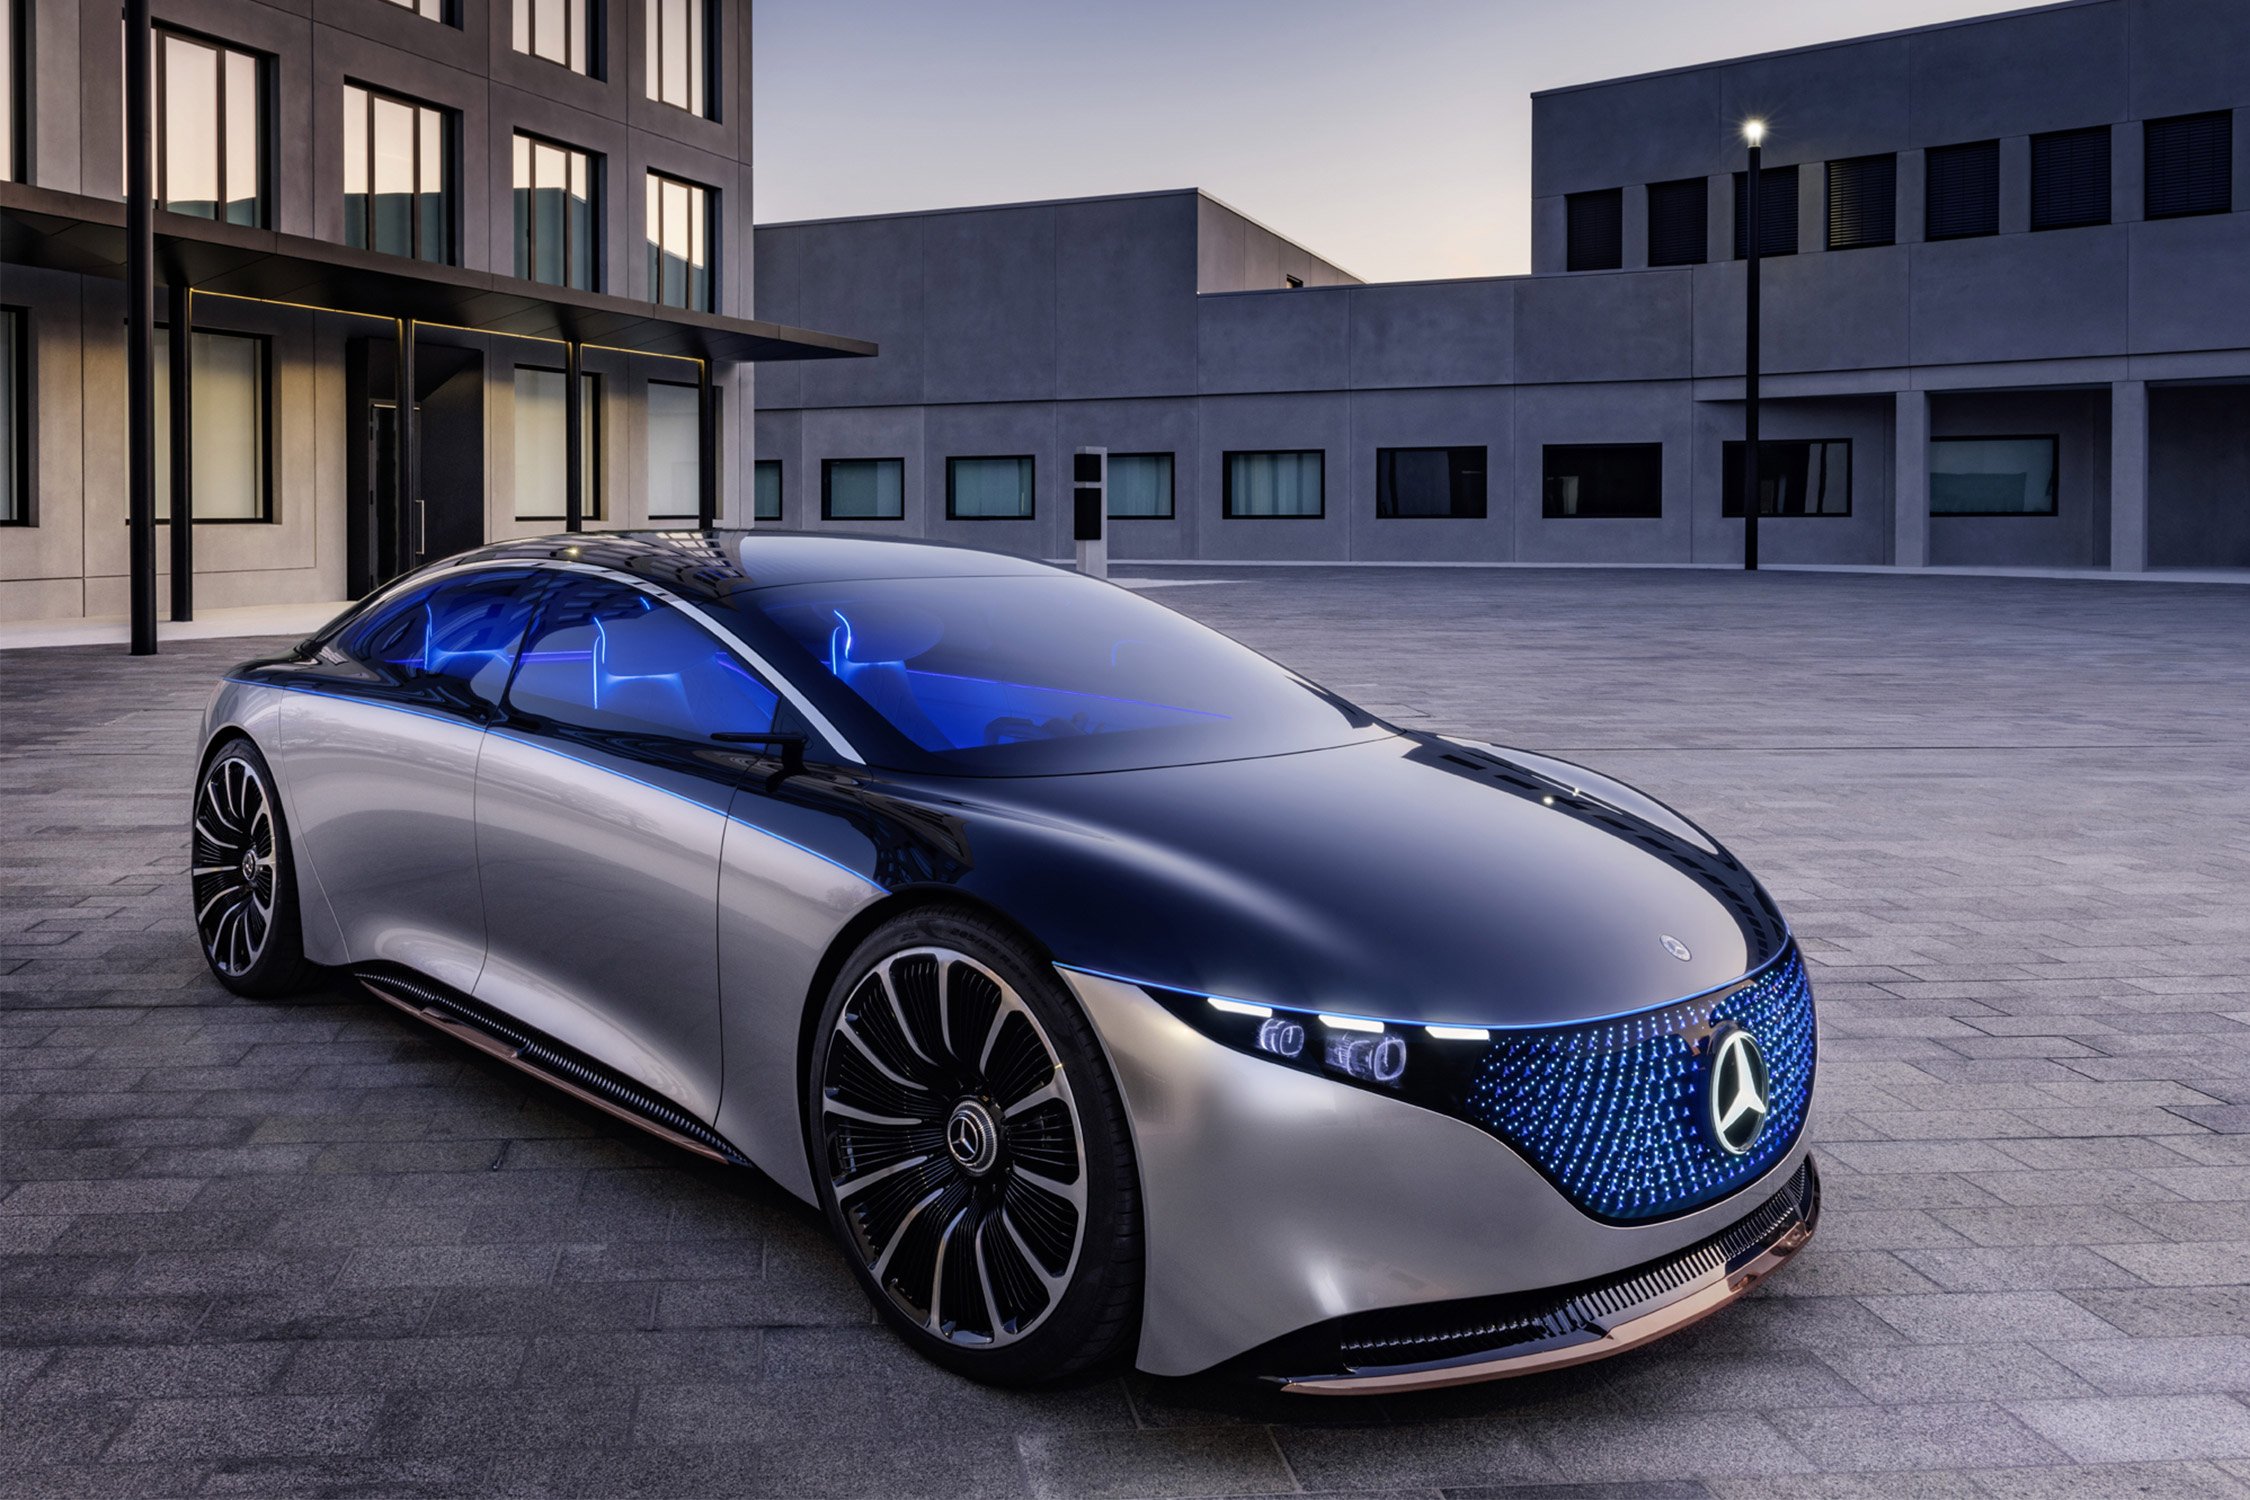 photo MERCEDES VISION EQS concept concept-car 2019 - Motorlegend.com